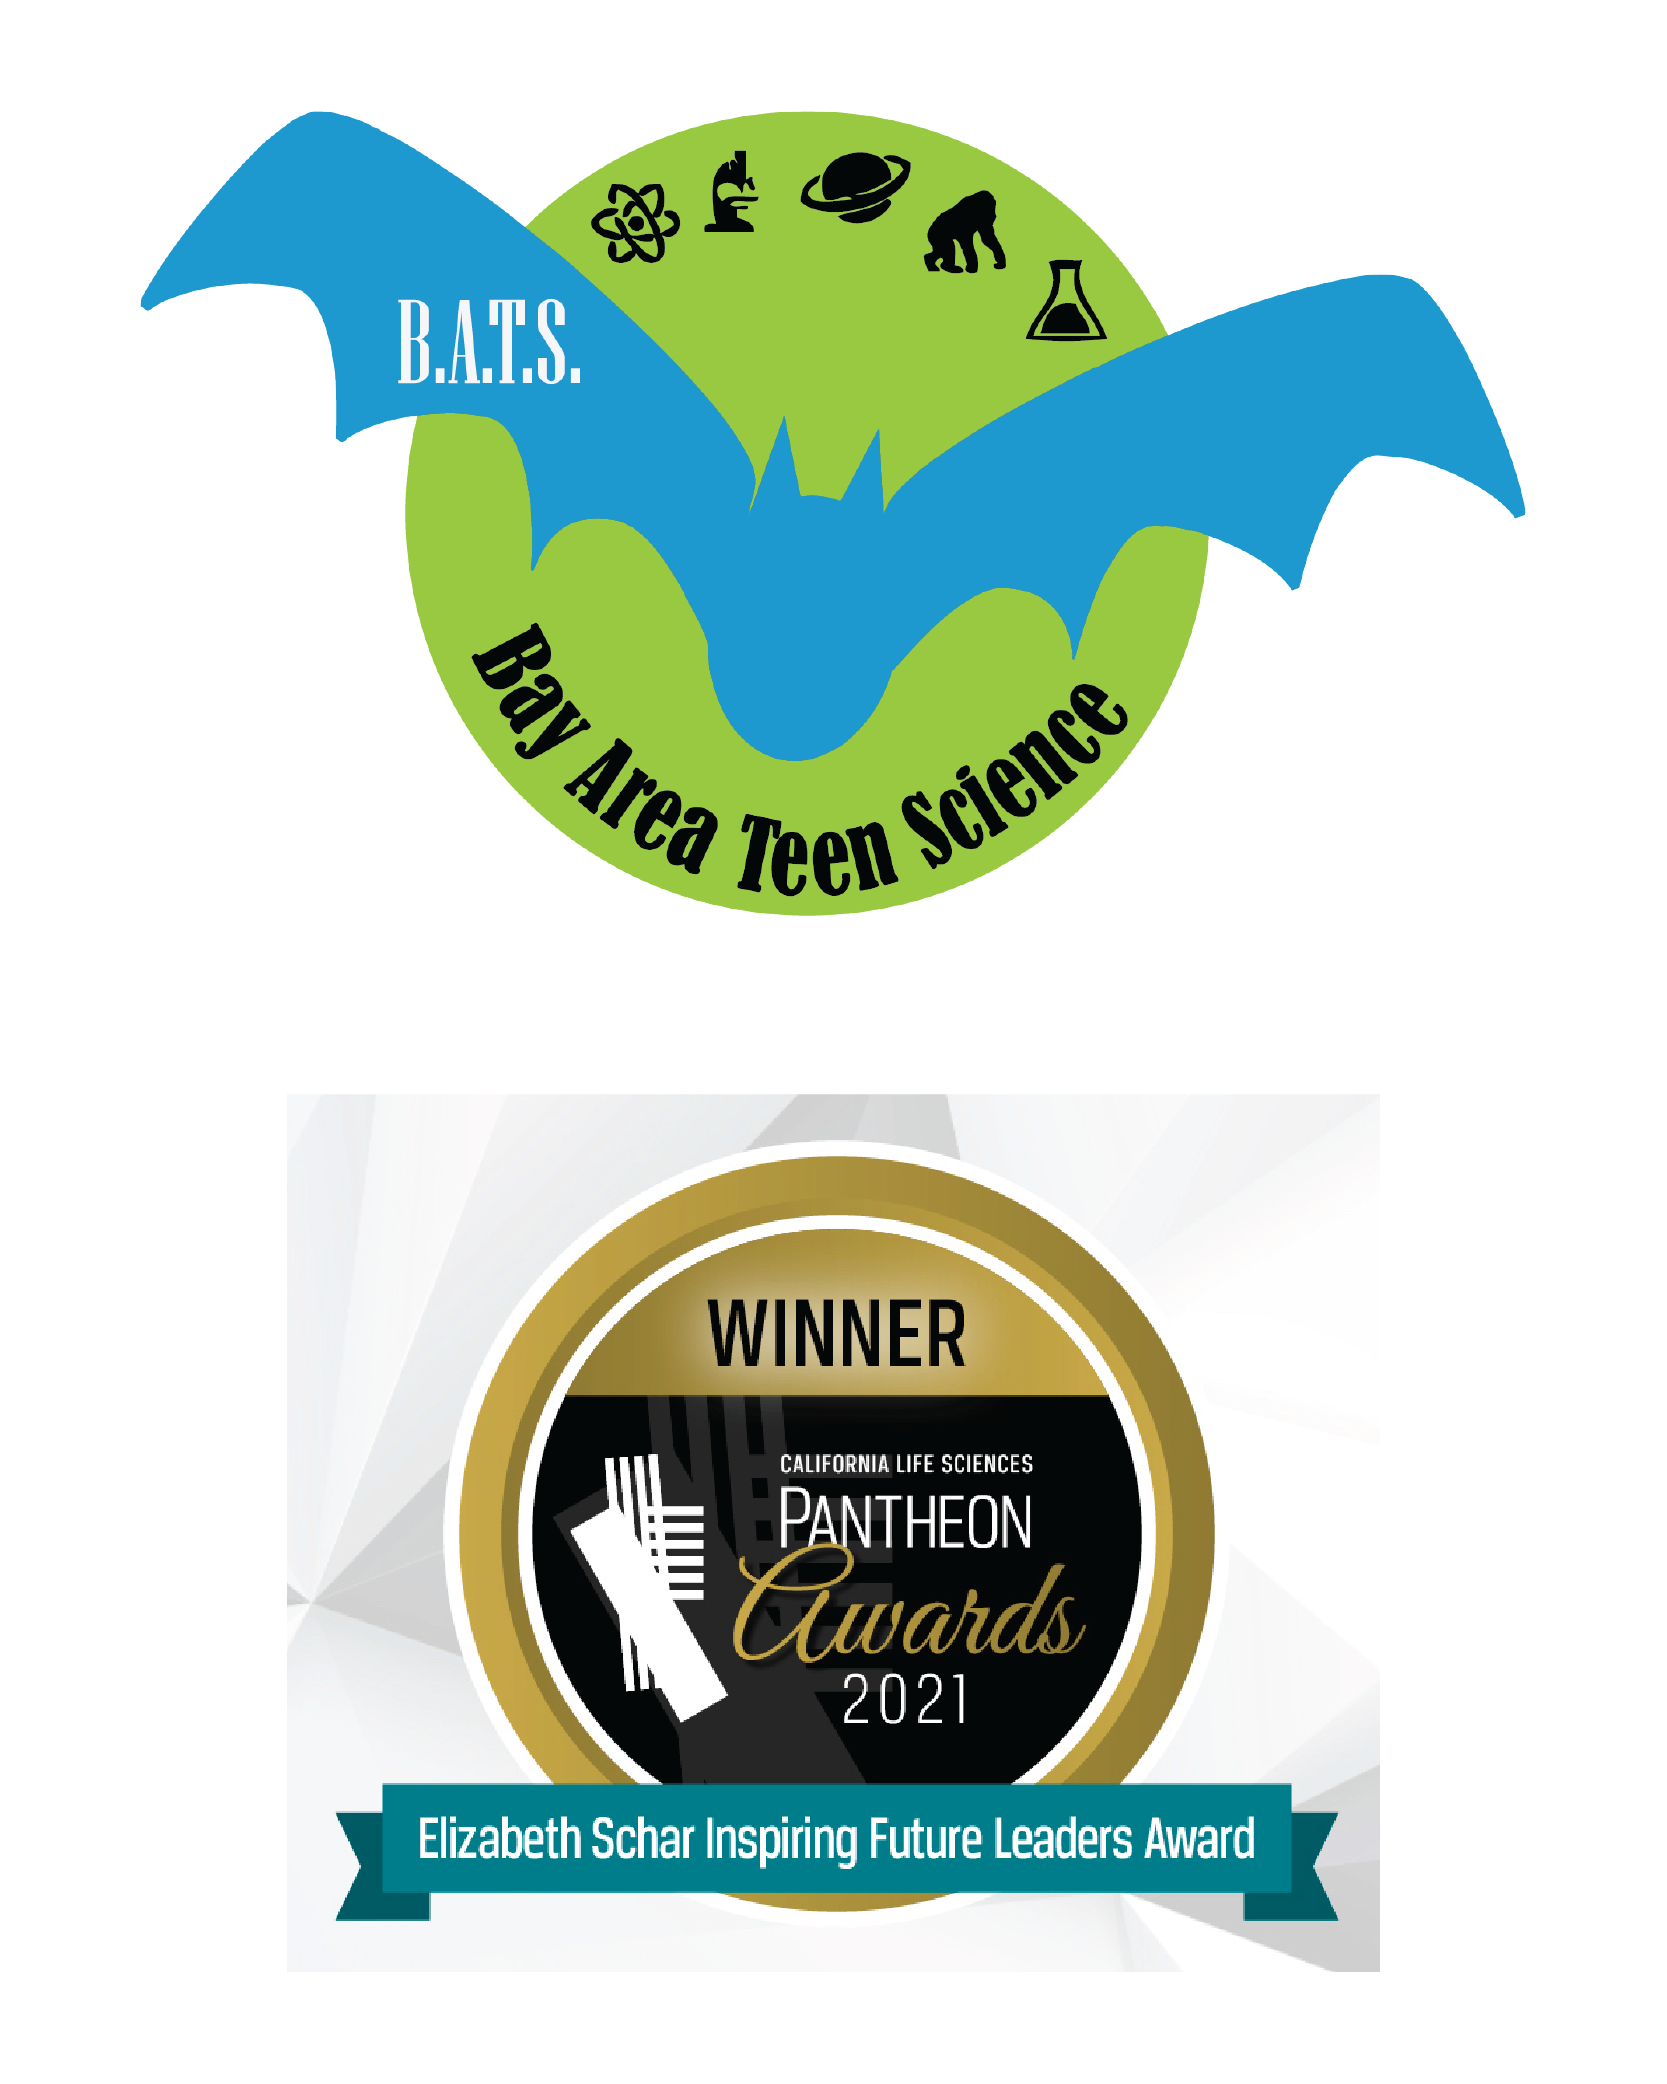 Bay Area Teen Science (B.A.T.S.) won California Life Sciences’ 2021 Pantheon Awards!